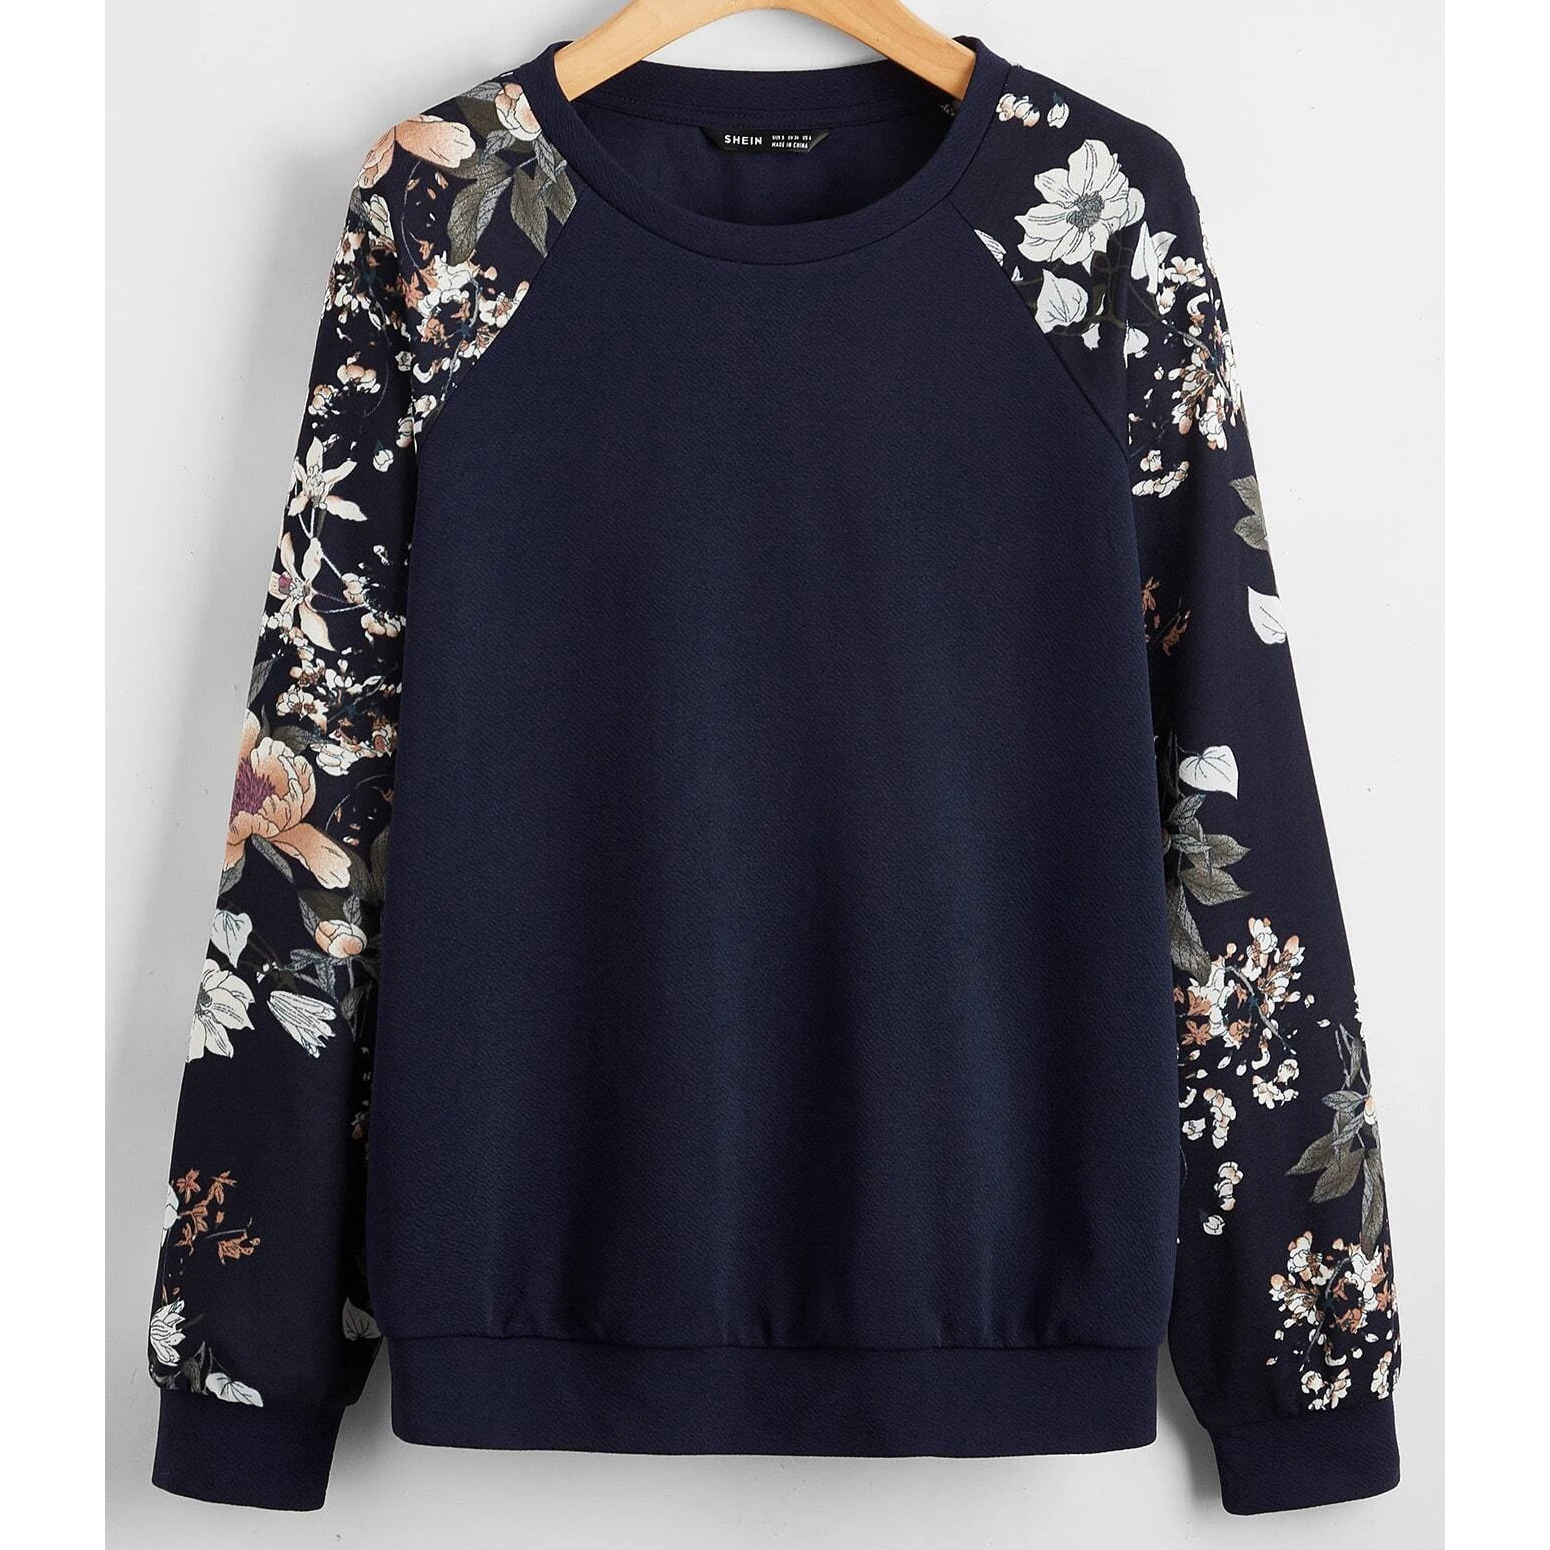 Floral Raglan Sleeve Pullover - X-Large(12)